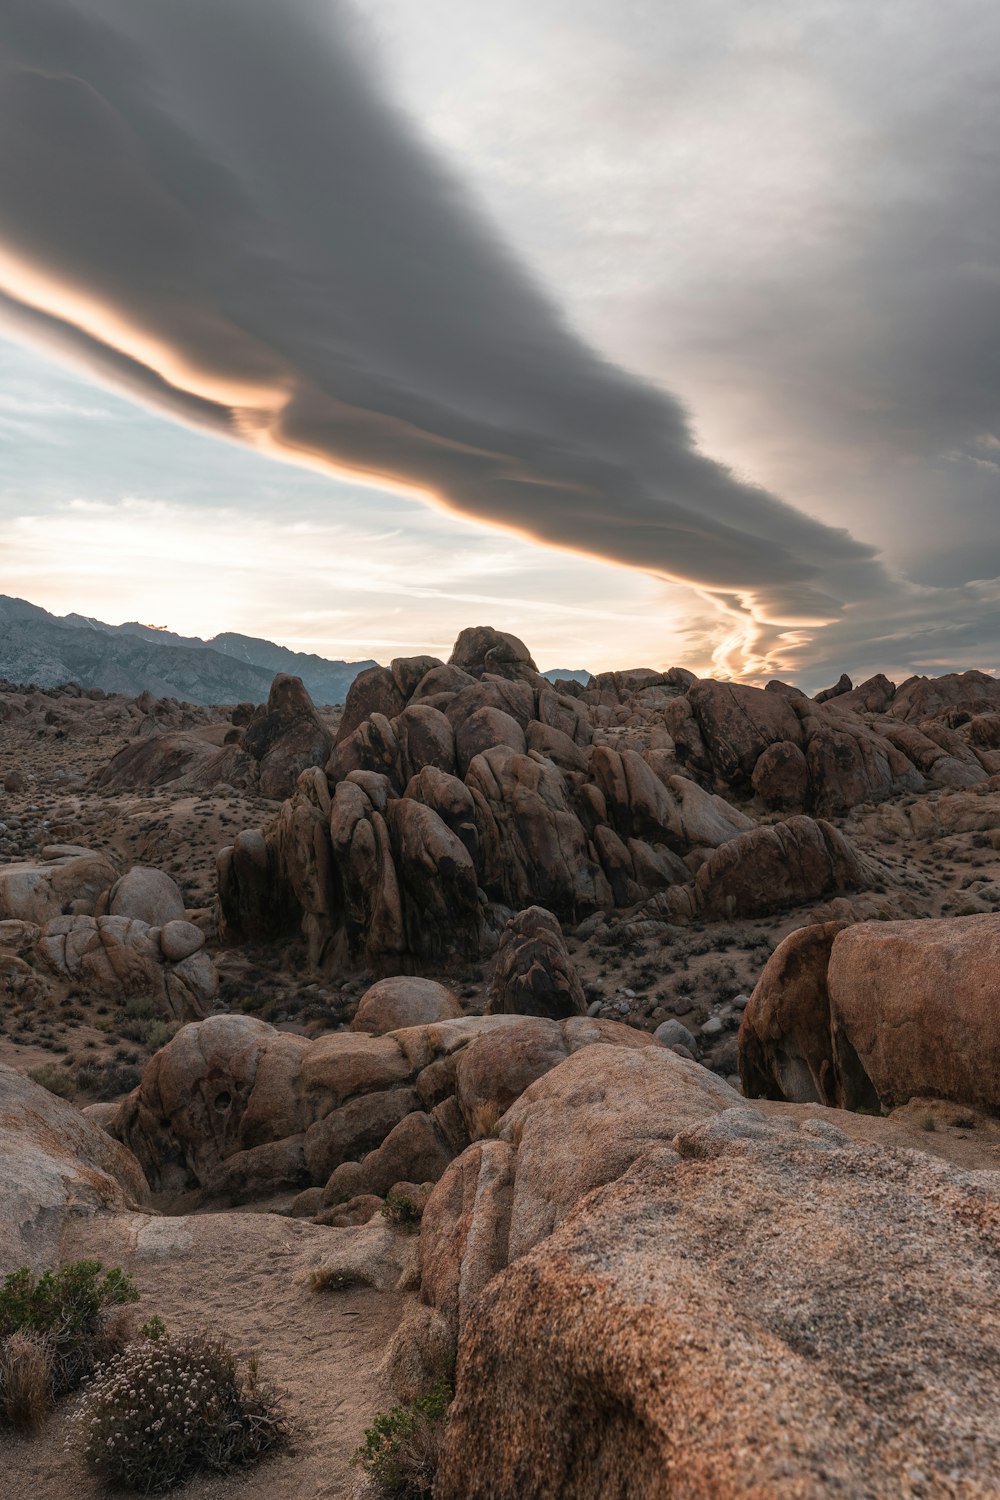 a rocky area with a cloudy sky